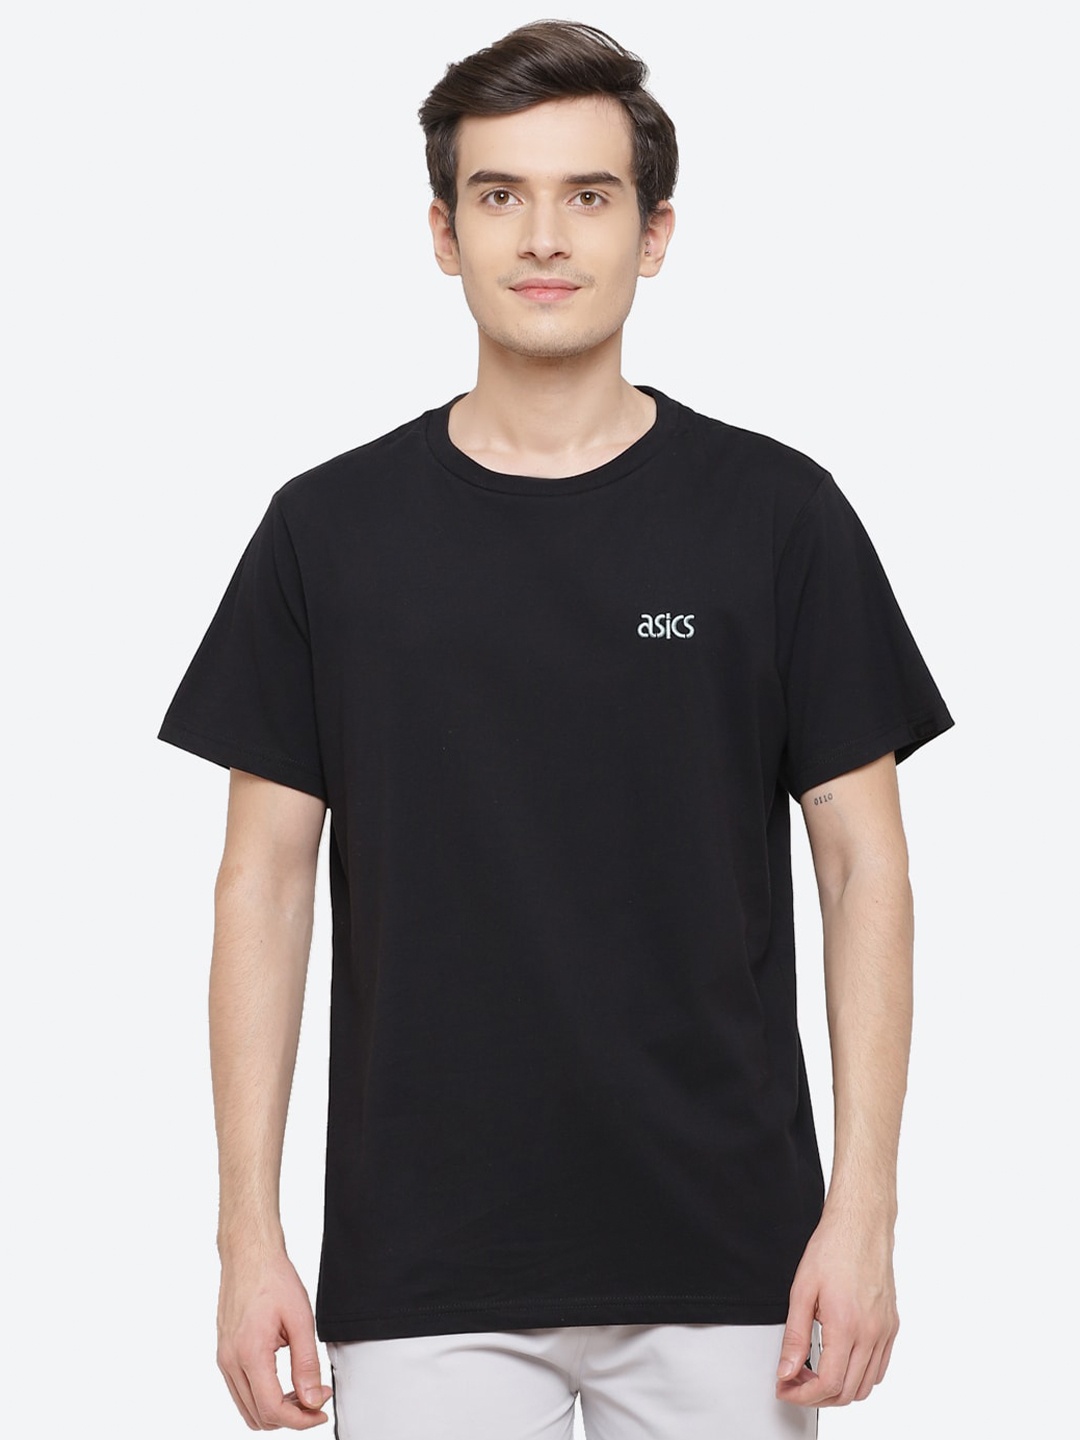 

ASICS Men Printed JSY JPN GPX SS 1 Sports Walking T-shirt, Black